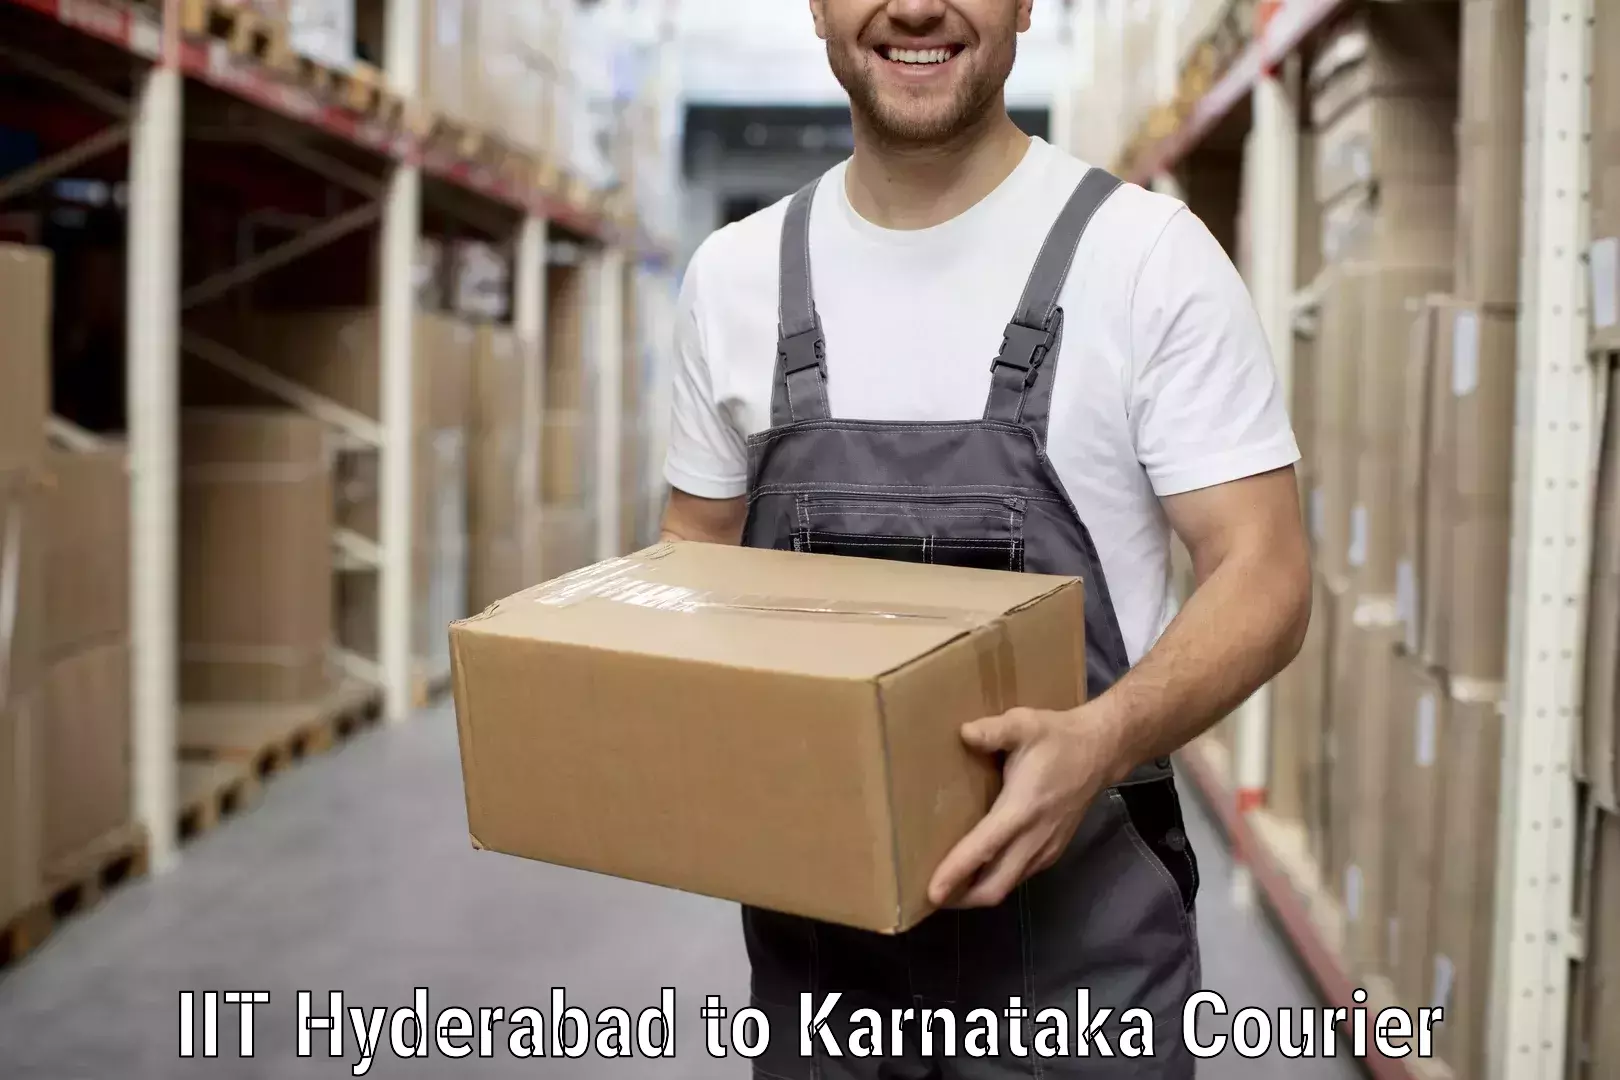 Professional movers IIT Hyderabad to Mysore University